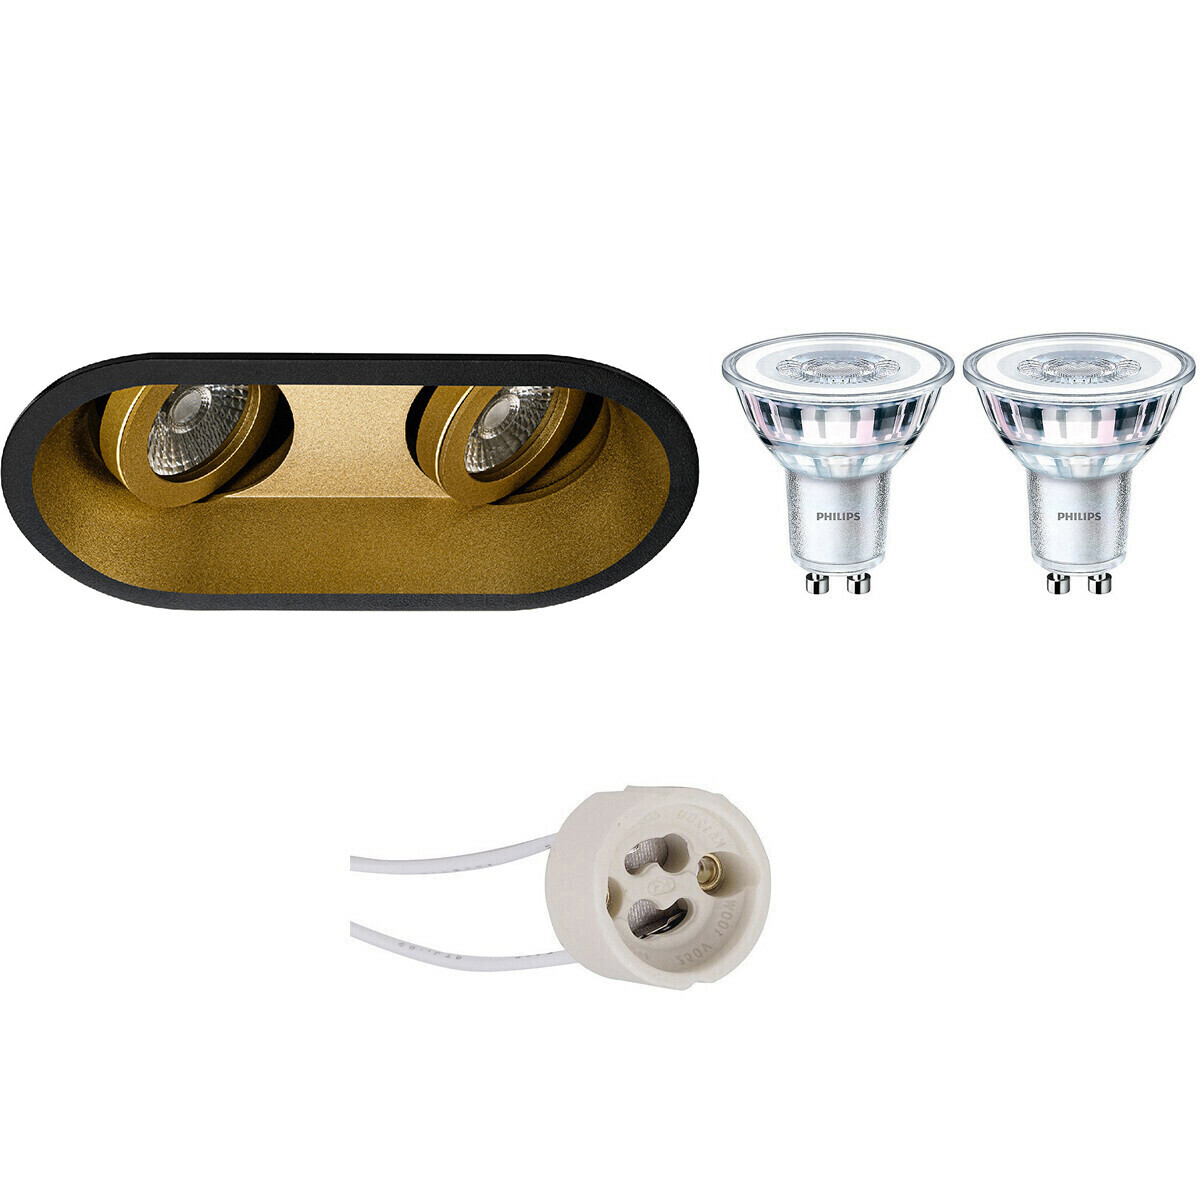 BES LED LED Spot Set - Pragmi Zano Pro - GU10 Fitting - Inbouw Ovaal Dubbel - Mat Zwart/Goud - Kantelbaar - 185x93mm - Philips - CorePro 840 36D - 4W - Natuurlijk Wit 4000K - Dimbaar